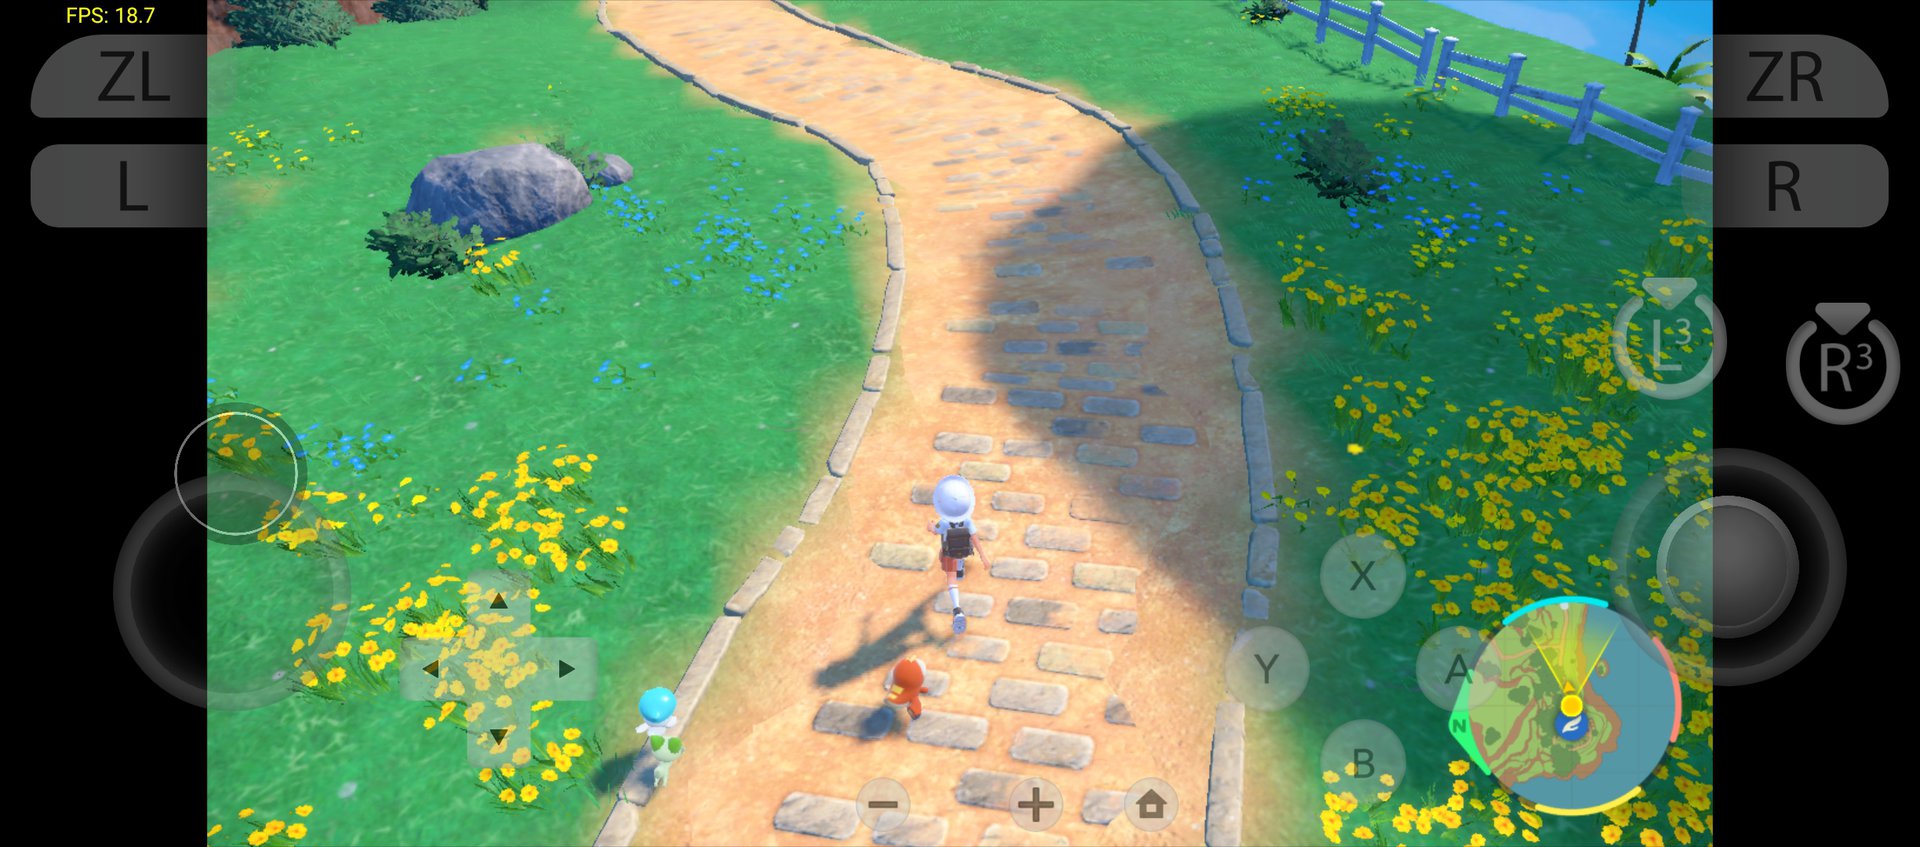 Yuzu emulator on Android Pokemon Scarlet Screenshot 6 9626